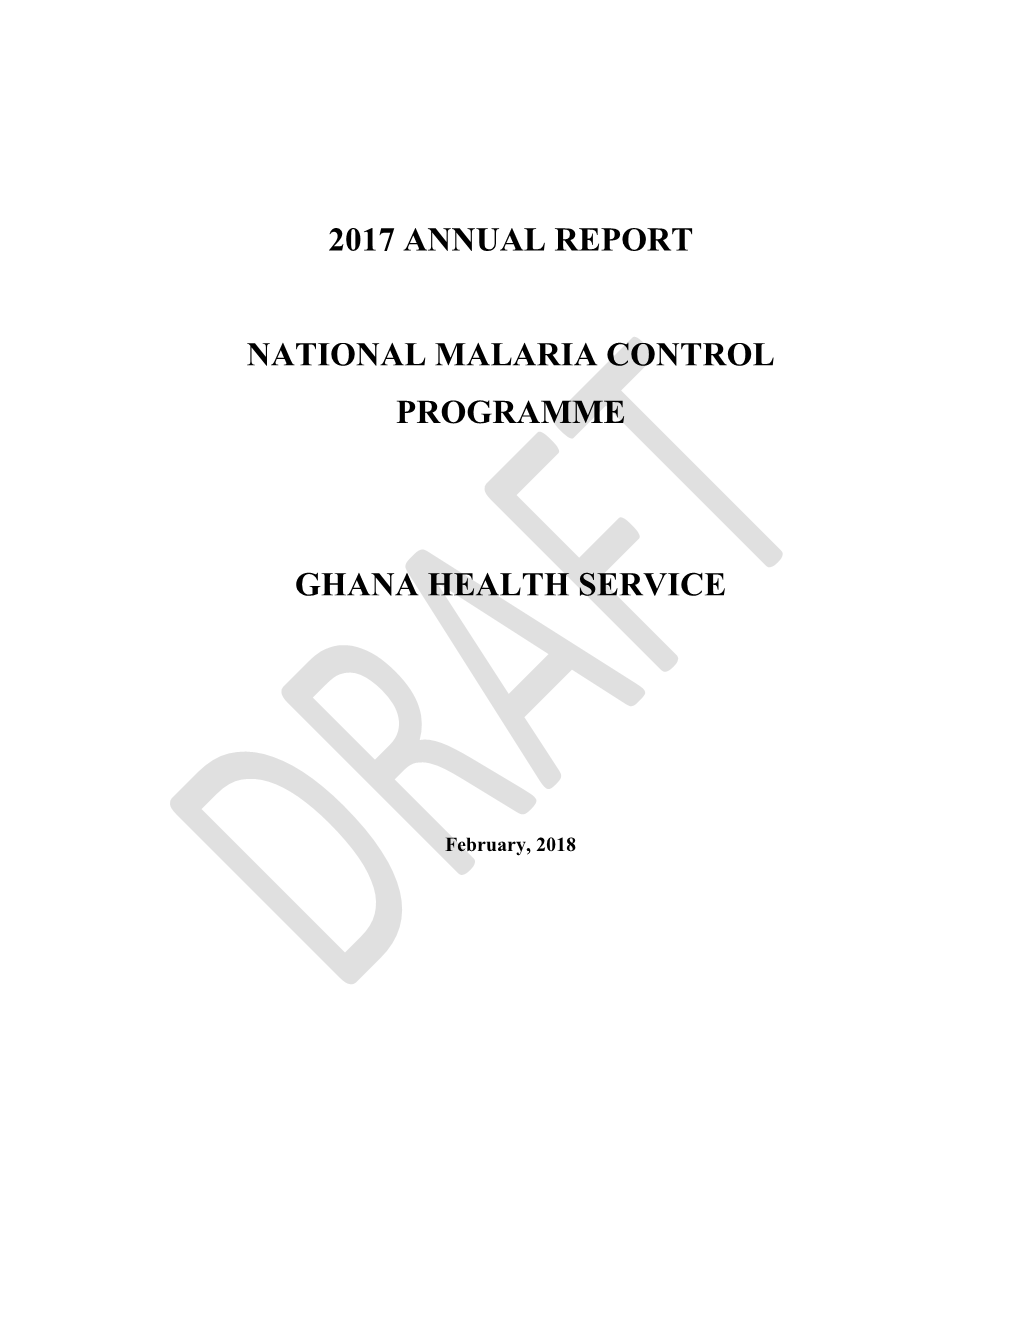 2017 Annual Report National Malaria Control Programme Ghana Health